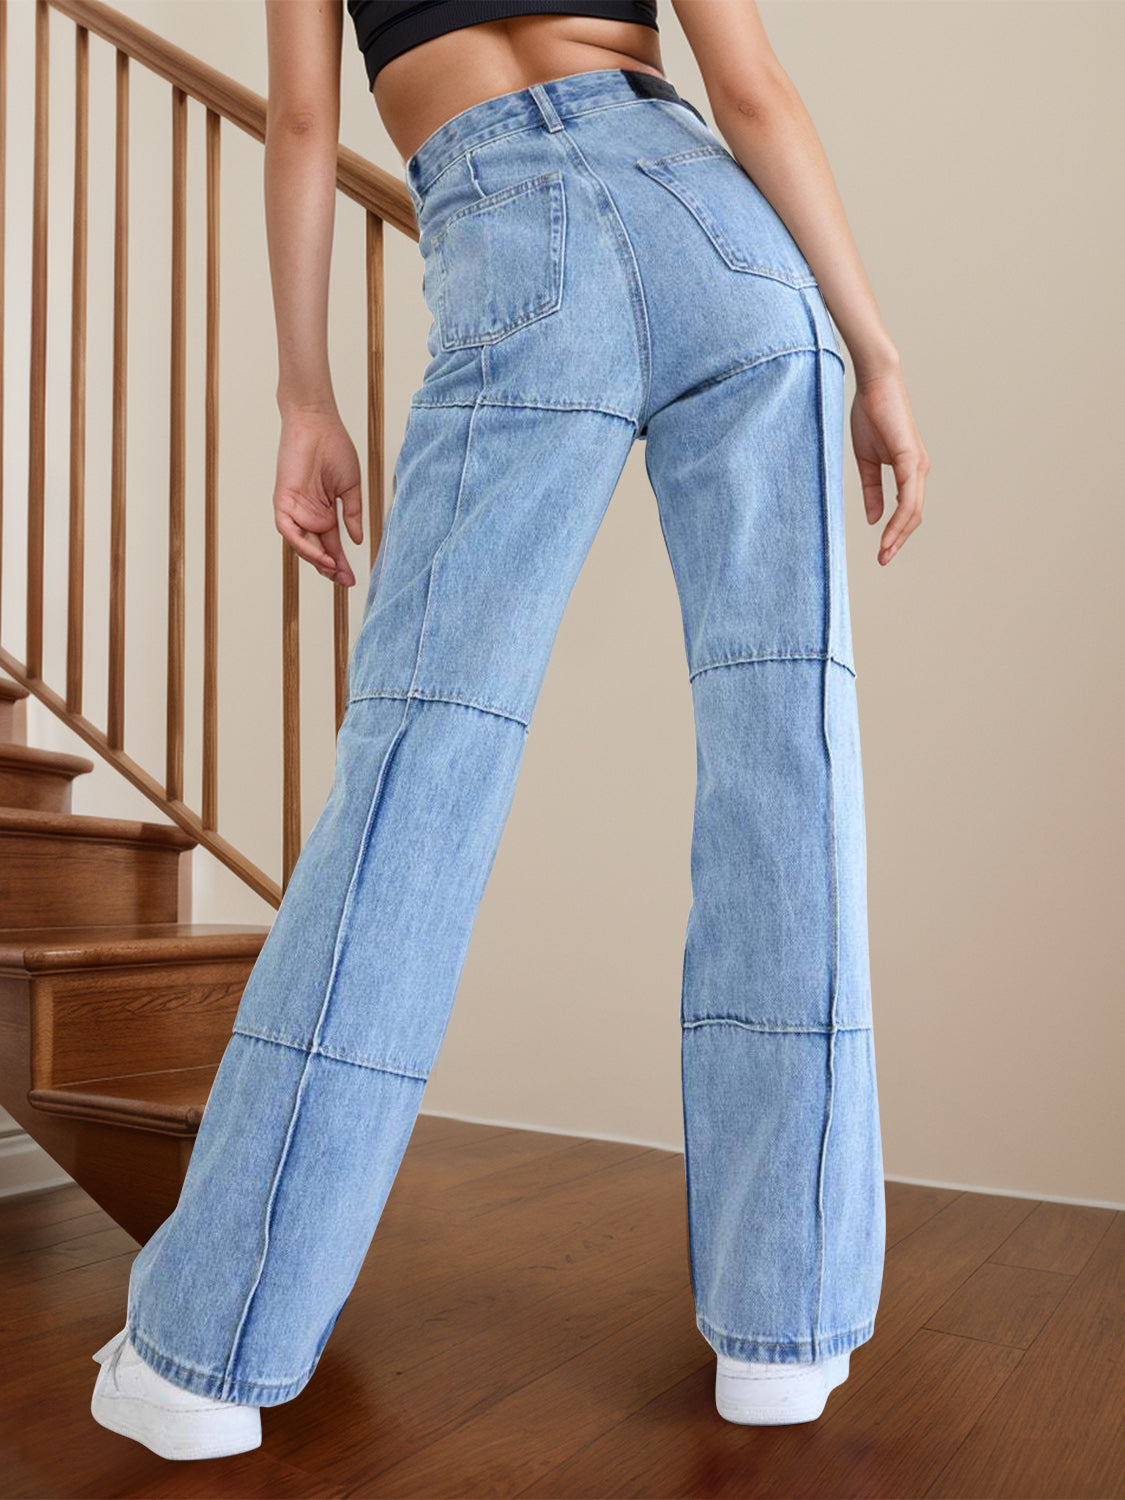 FZ Women's High Waist Straight Denim Pants with Pockets - FZwear